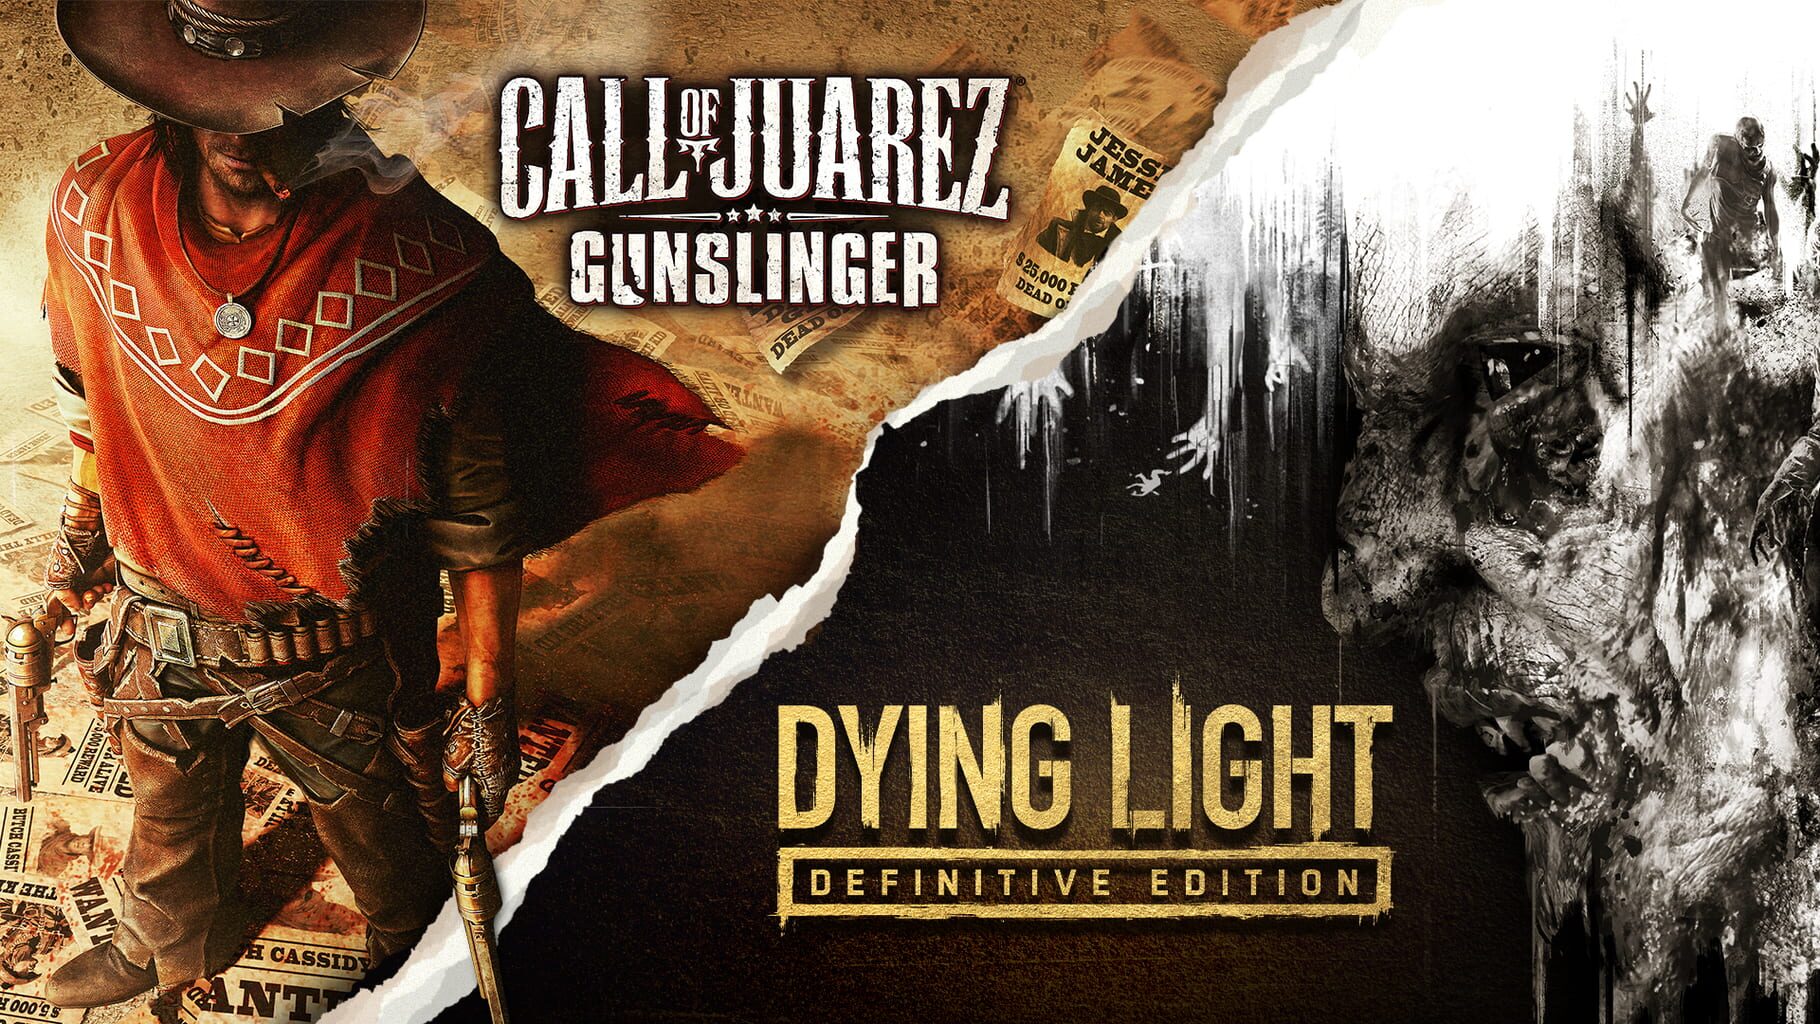 Dying Light: Definitive Edition & Call of Juarez: Gunslinger artwork